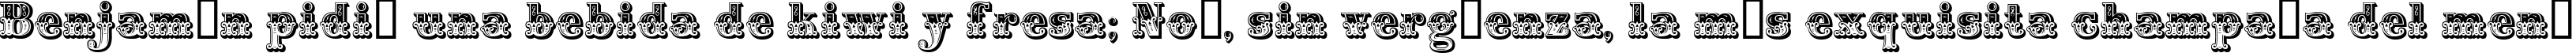 Пример написания шрифтом Monti-Decor A текста на испанском